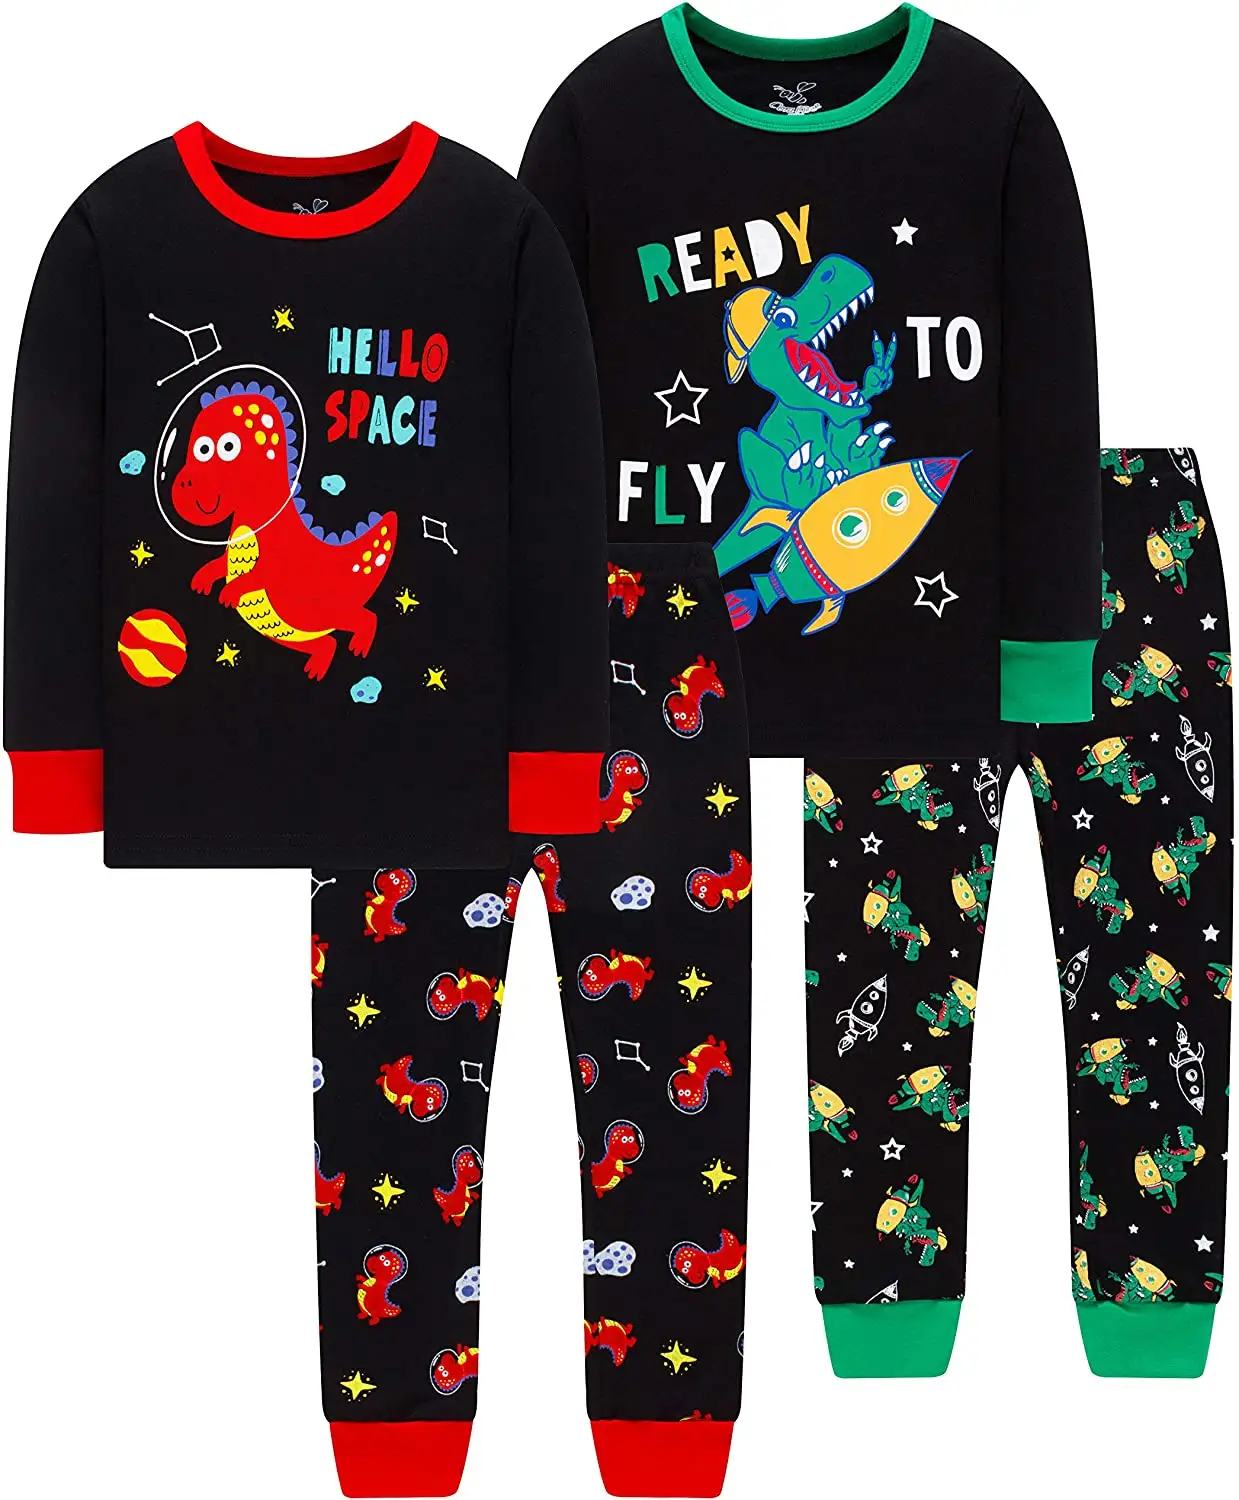 Pajamas Grow in The Dark Dinosaurs Sleepwear Christmas Baby Clothes Pants for Boys Girls